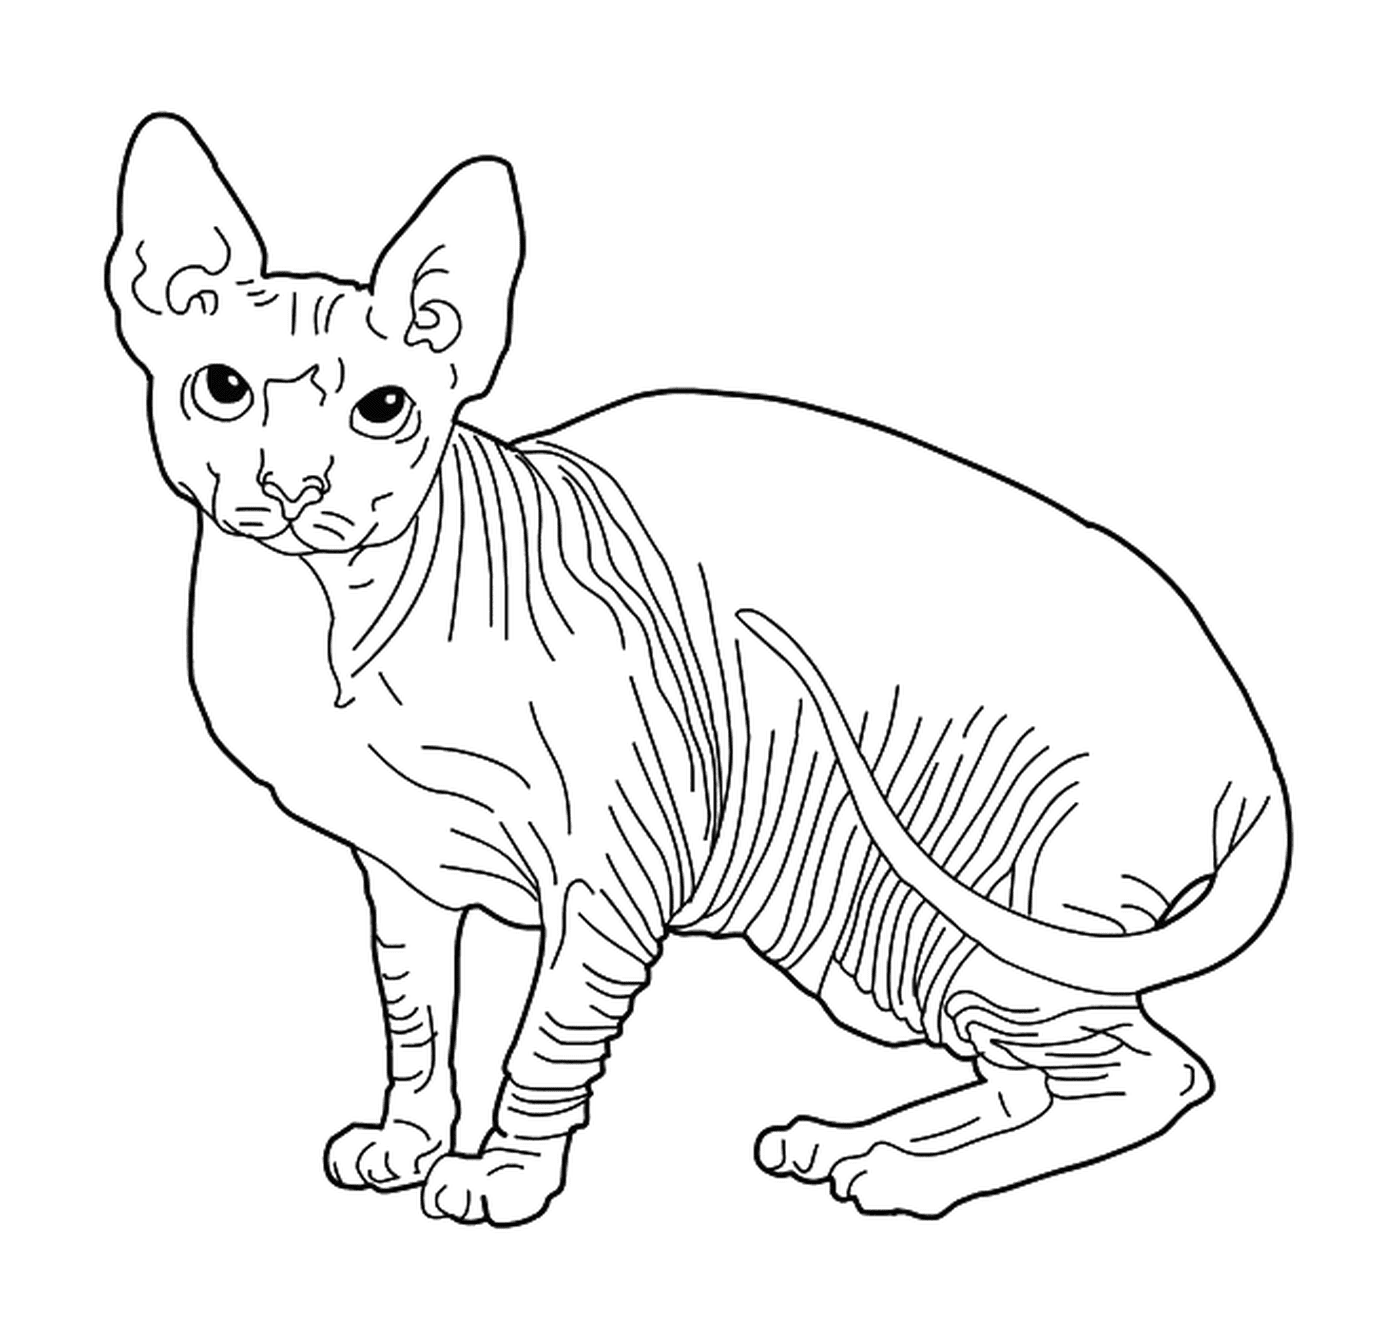  Sphynx, hairless cat 